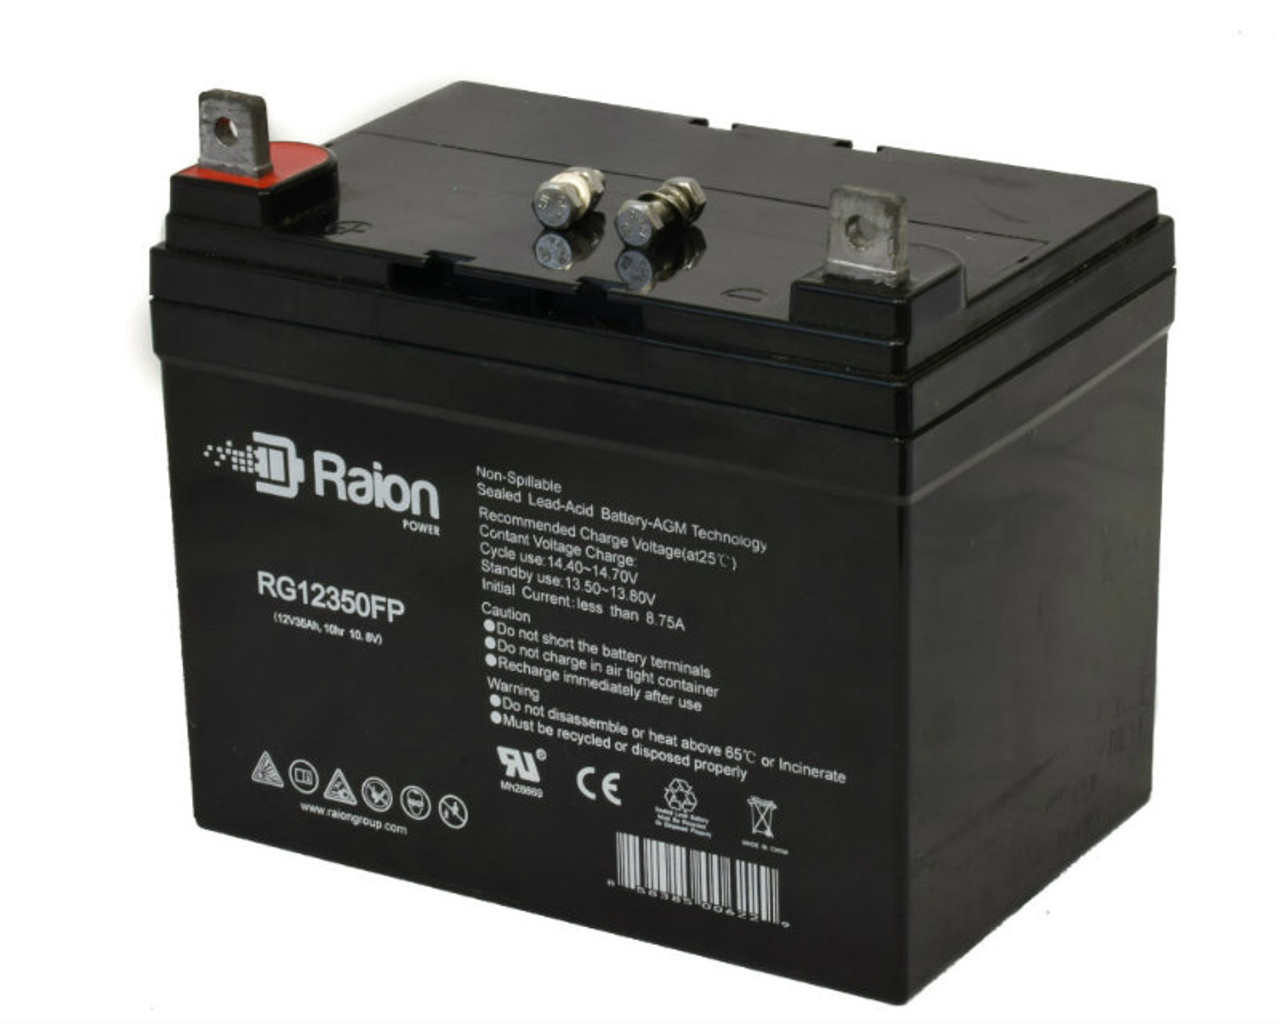 Raion Power Replacement 12V 35Ah RG12350FP Battery for Moridge MFG Co. 1822